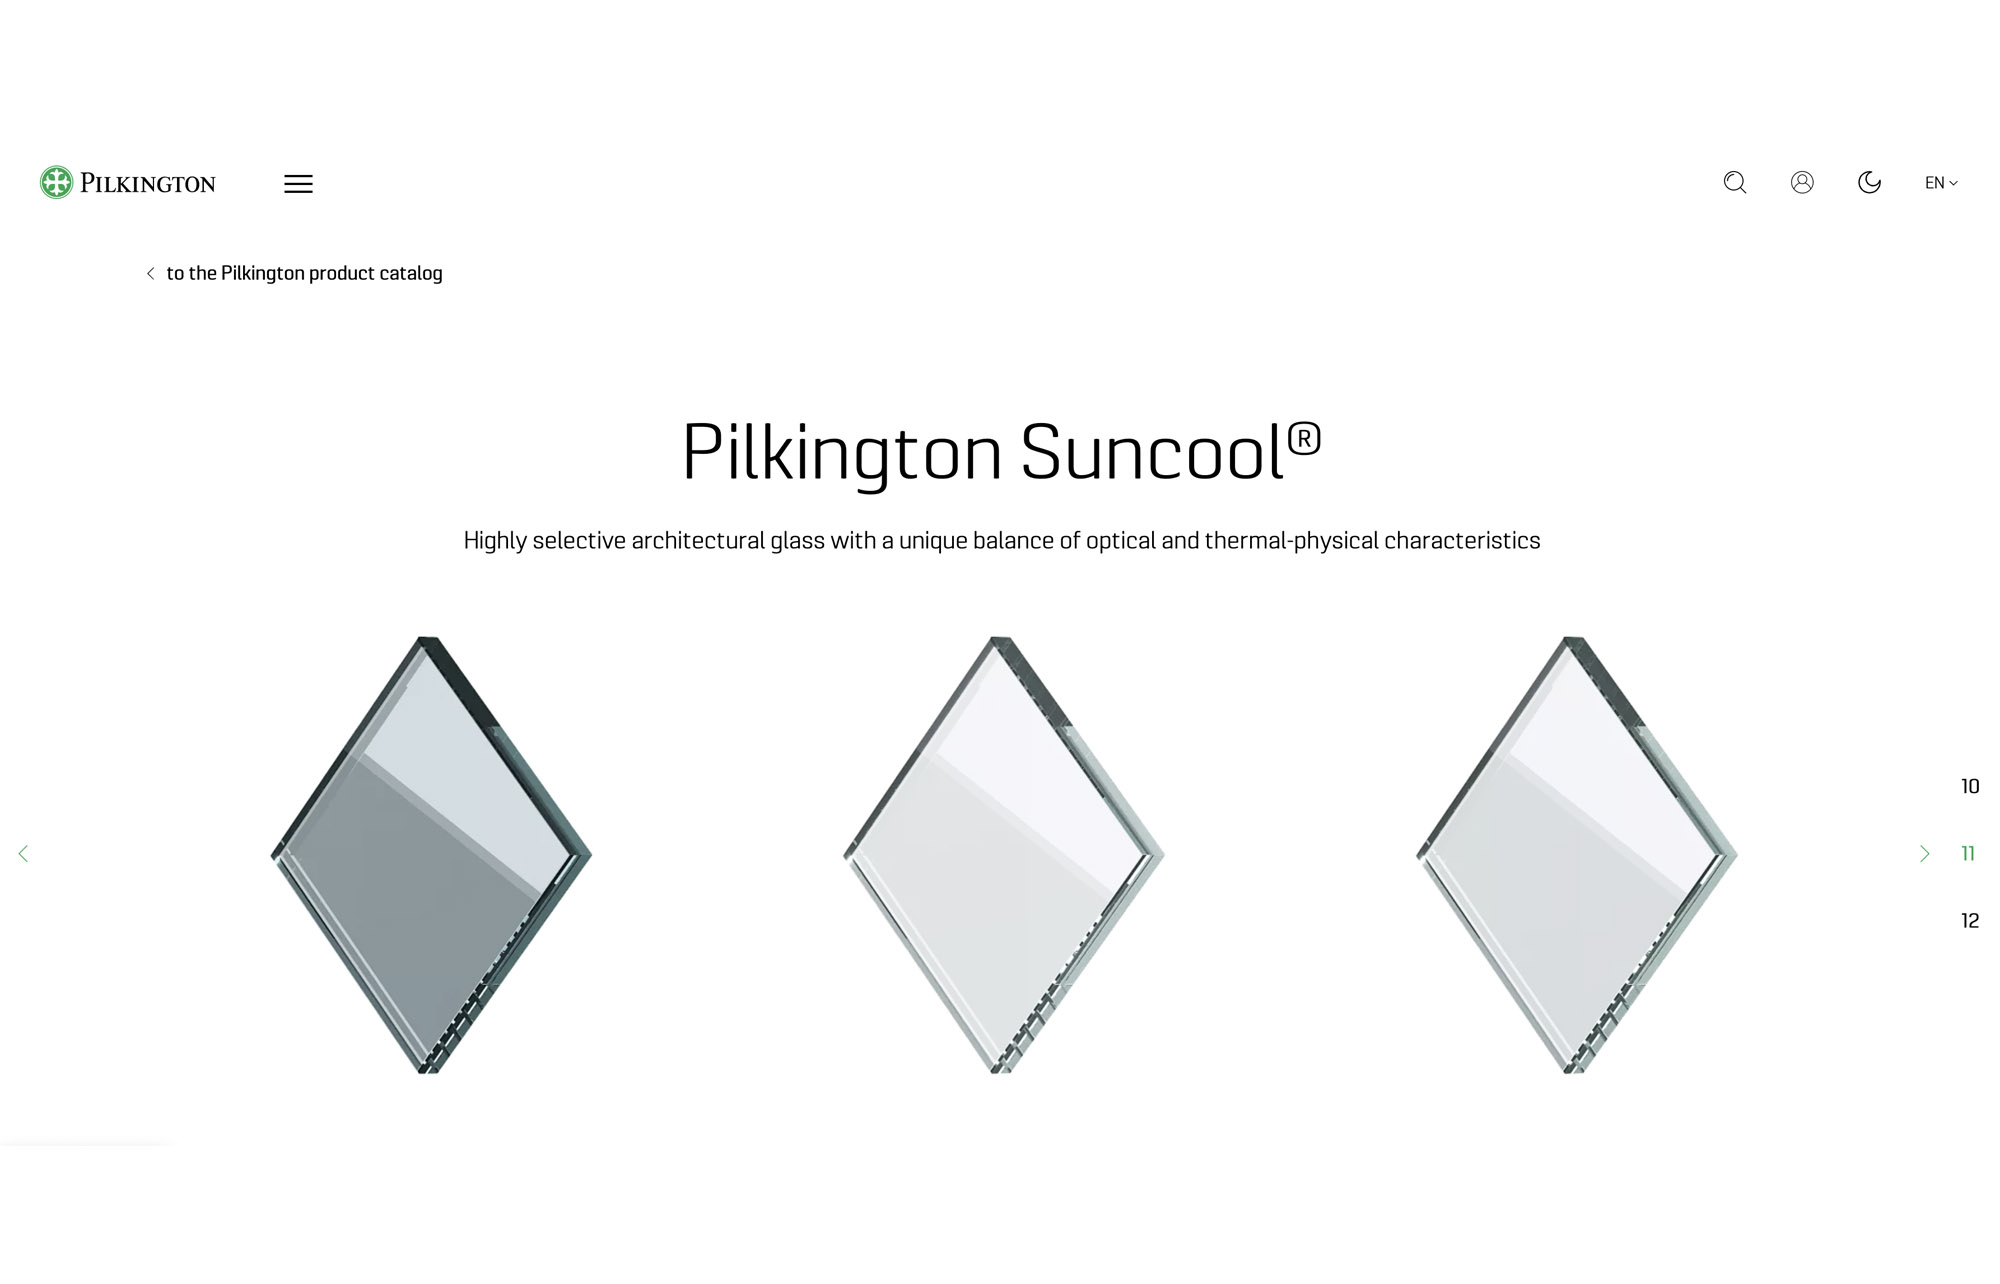 pilkington website - image 5